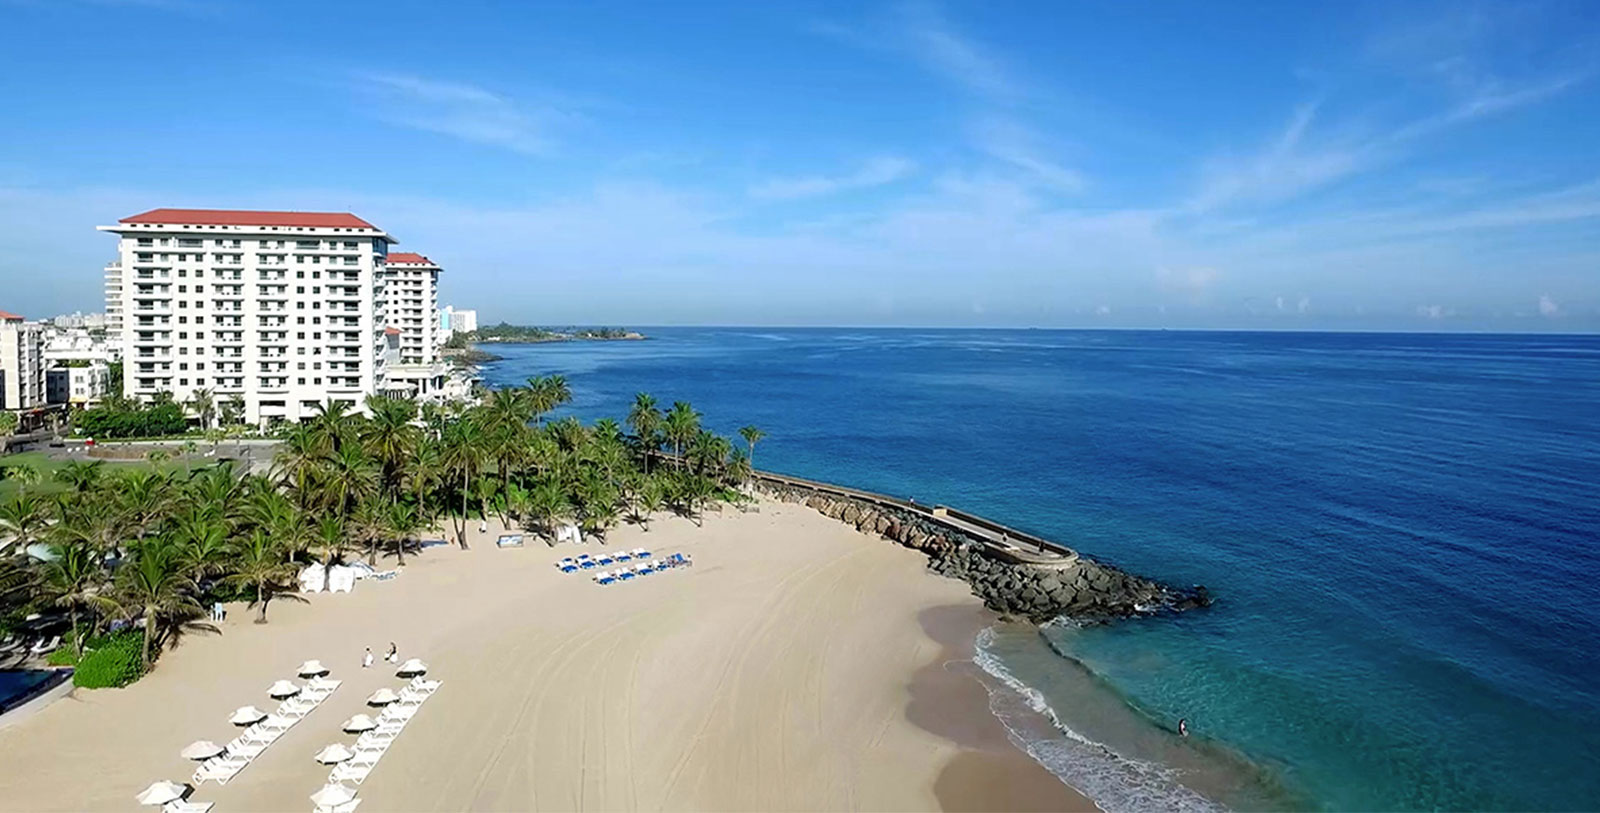 Explore the Condado Vanderbilt Hotel’s oceanfront promenade to the La Ventana al Mar, an oceanfront park translated as “Window to the Sea.”